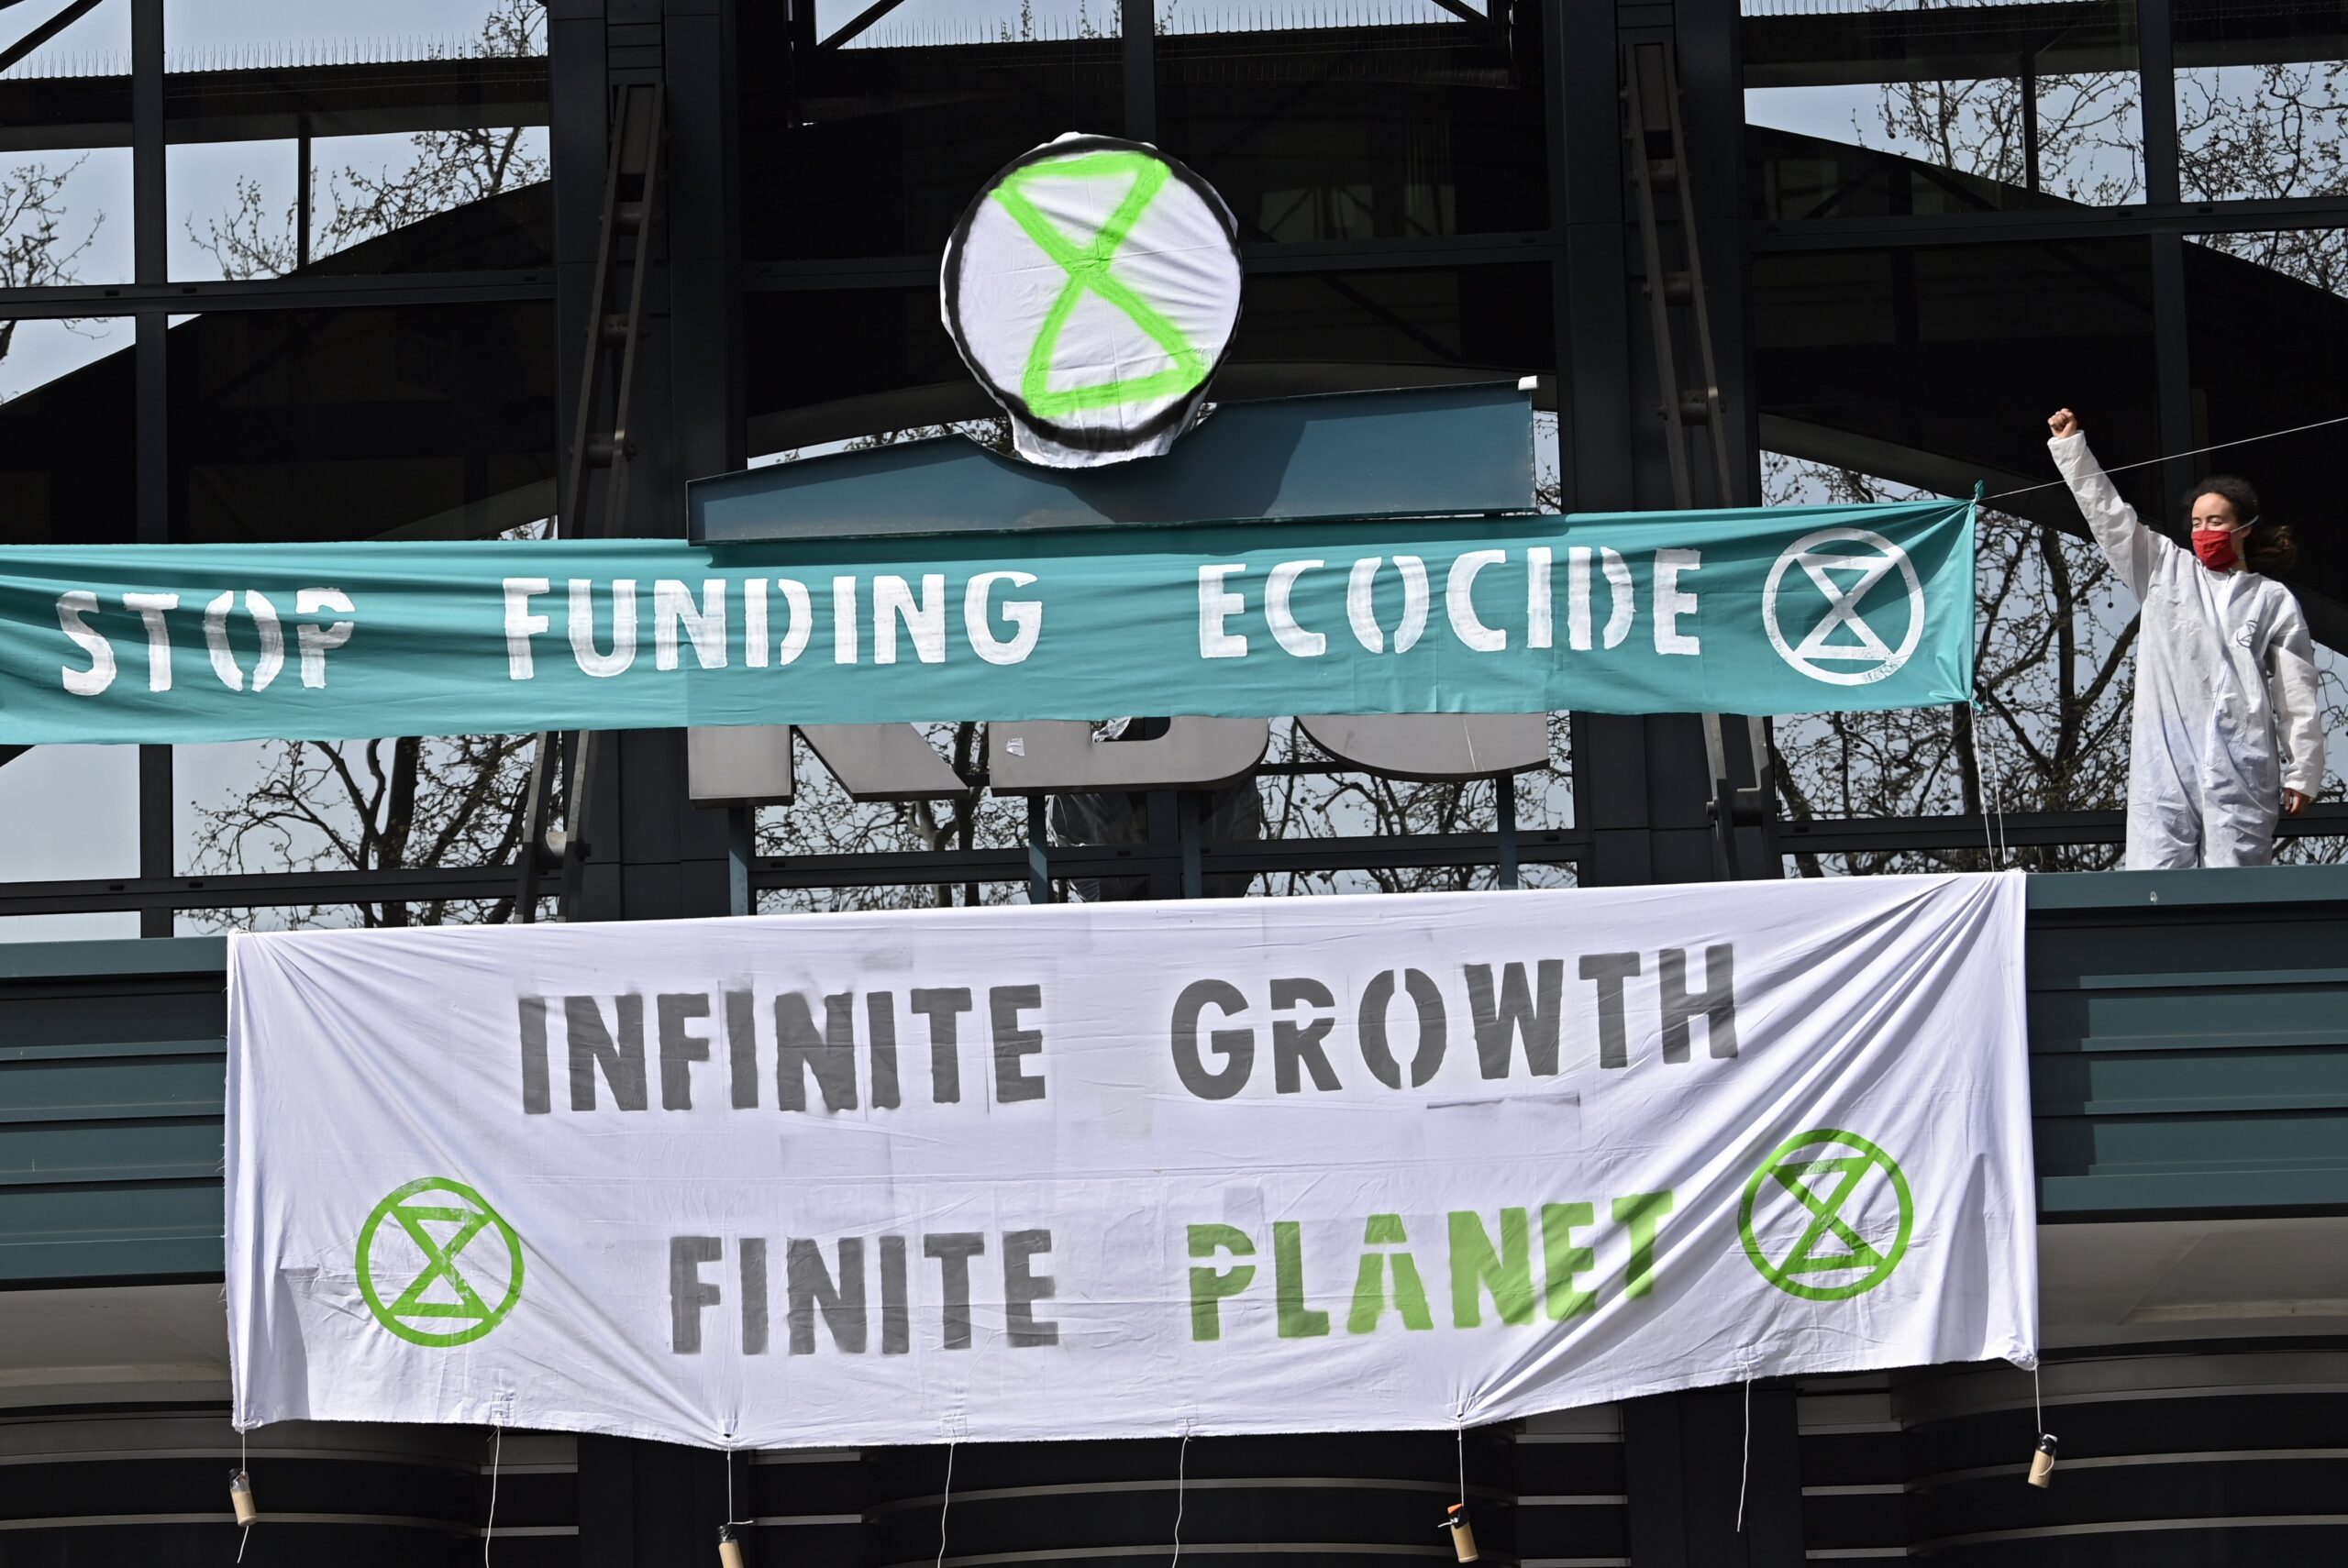 Betoging tegen ecocide. Foto Photonews.